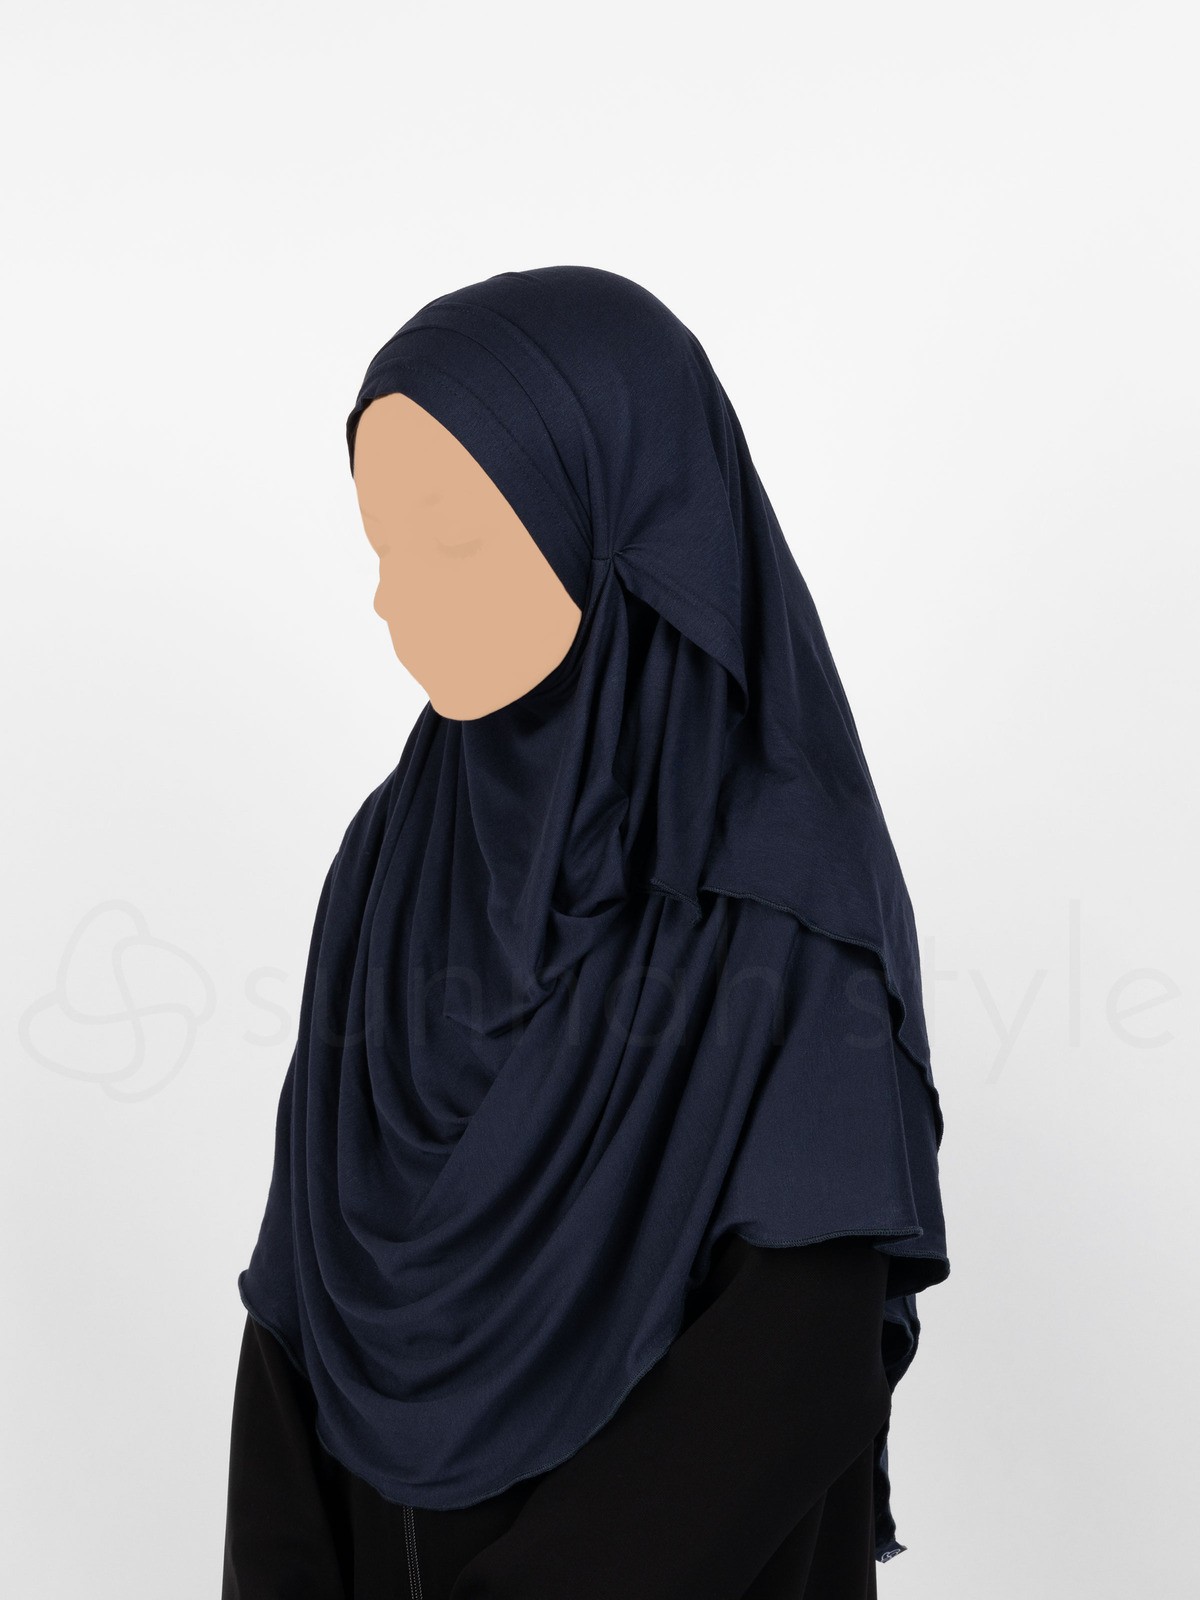 Sunnah Style - Girls Truss Hijab (Navy Blue)